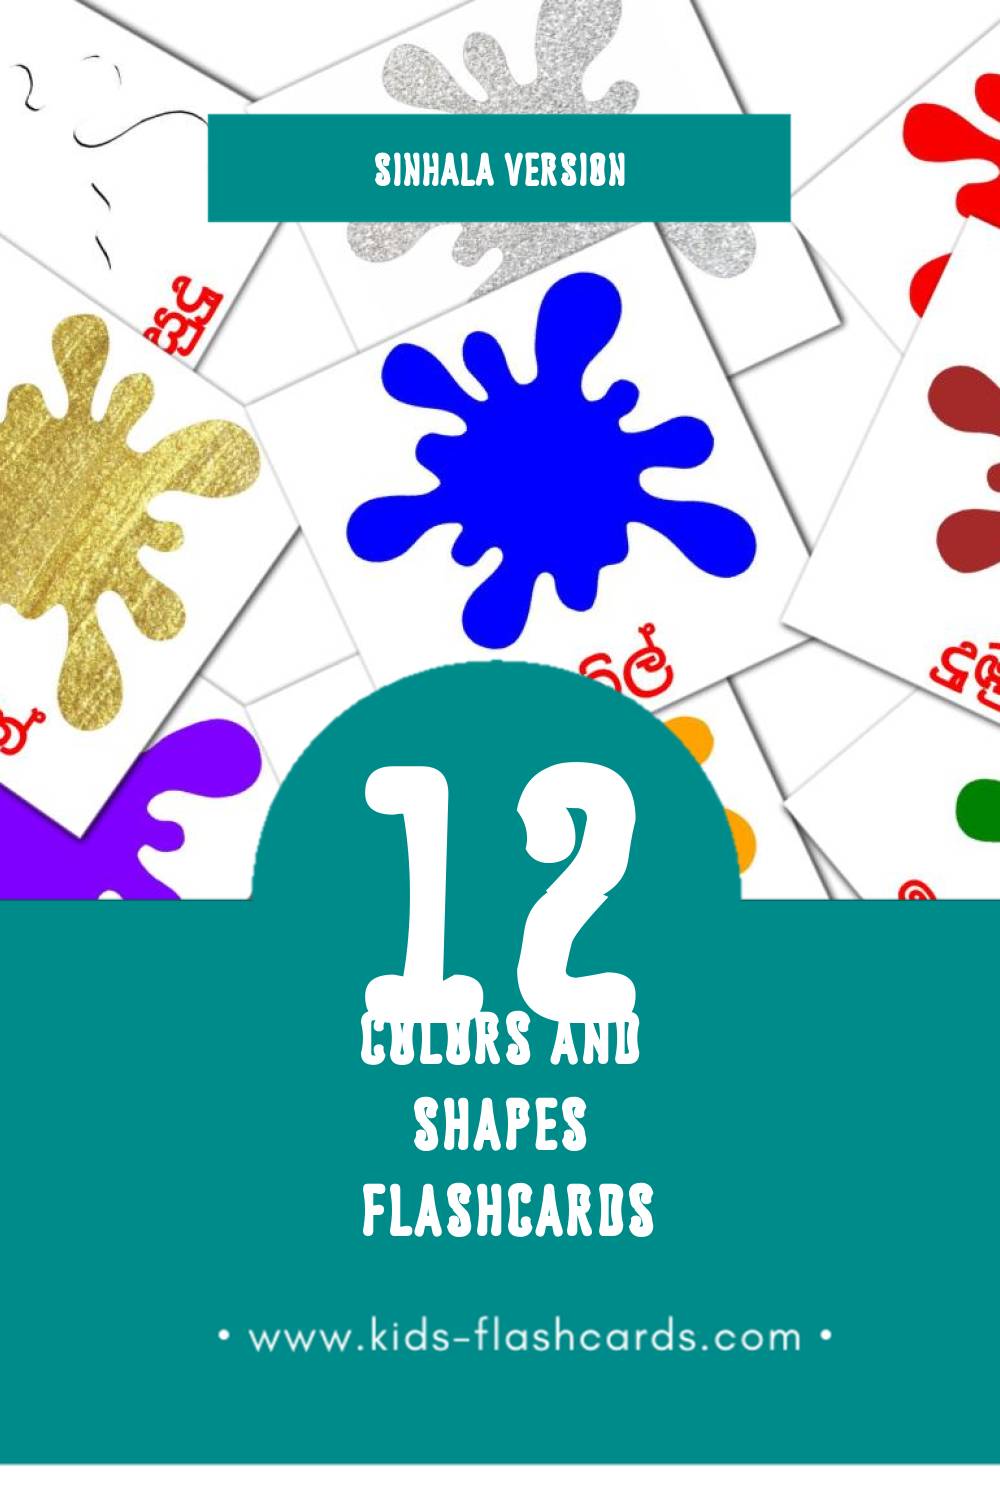 Visual හැඩය සහ වර්ණය Flashcards for Toddlers (12 cards in Sinhala)